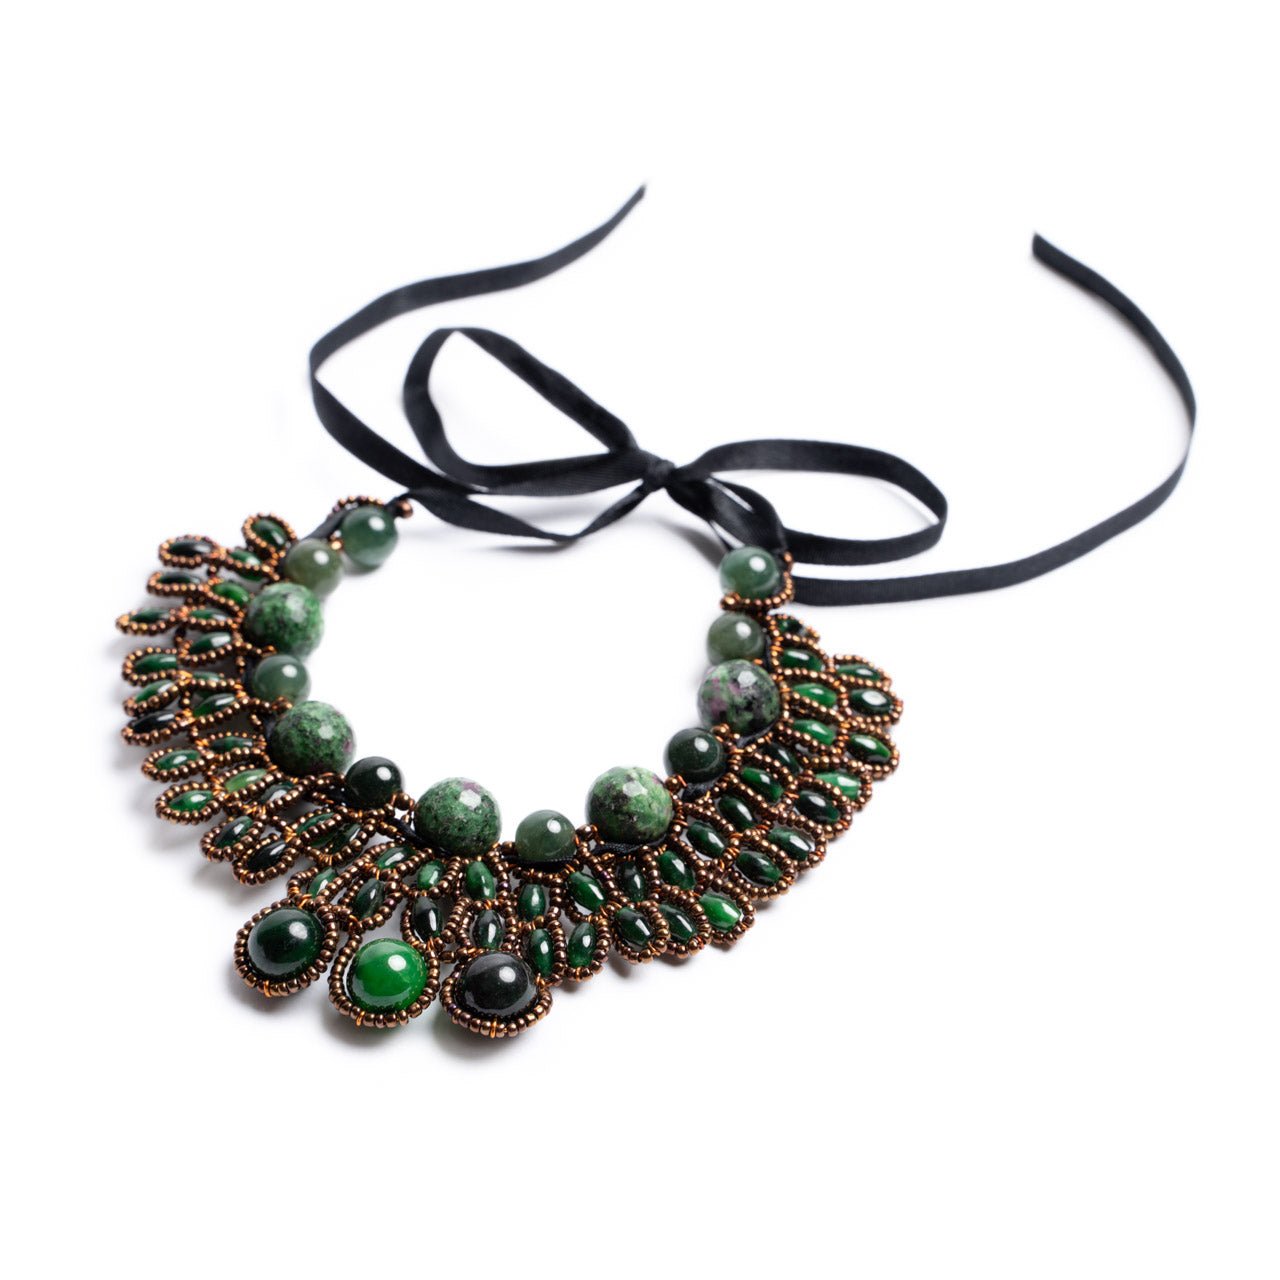 Green jade collar necklace with a ribbon - Sundara Joon